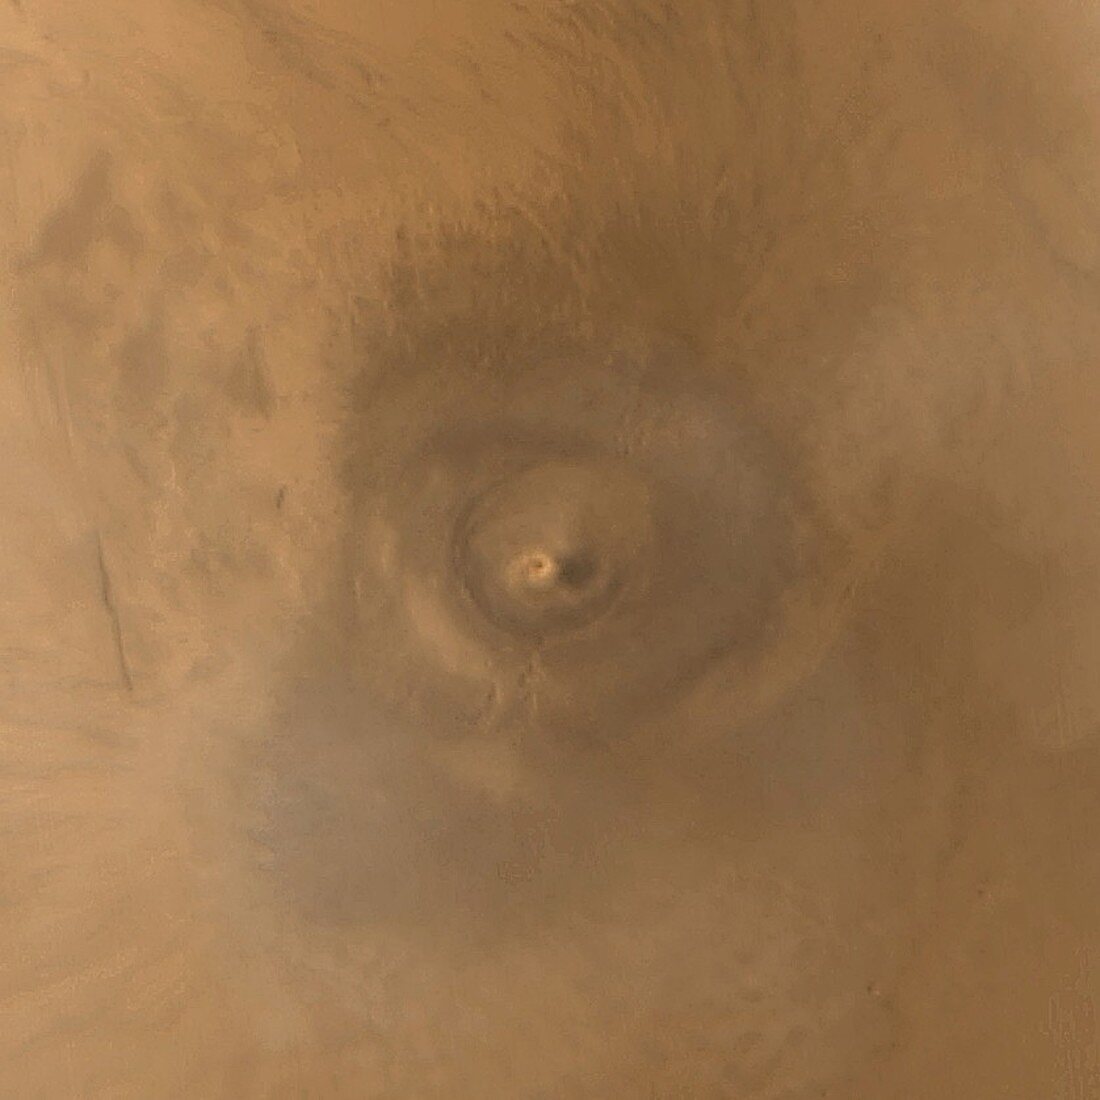 Arsia Mons volcano on Mars